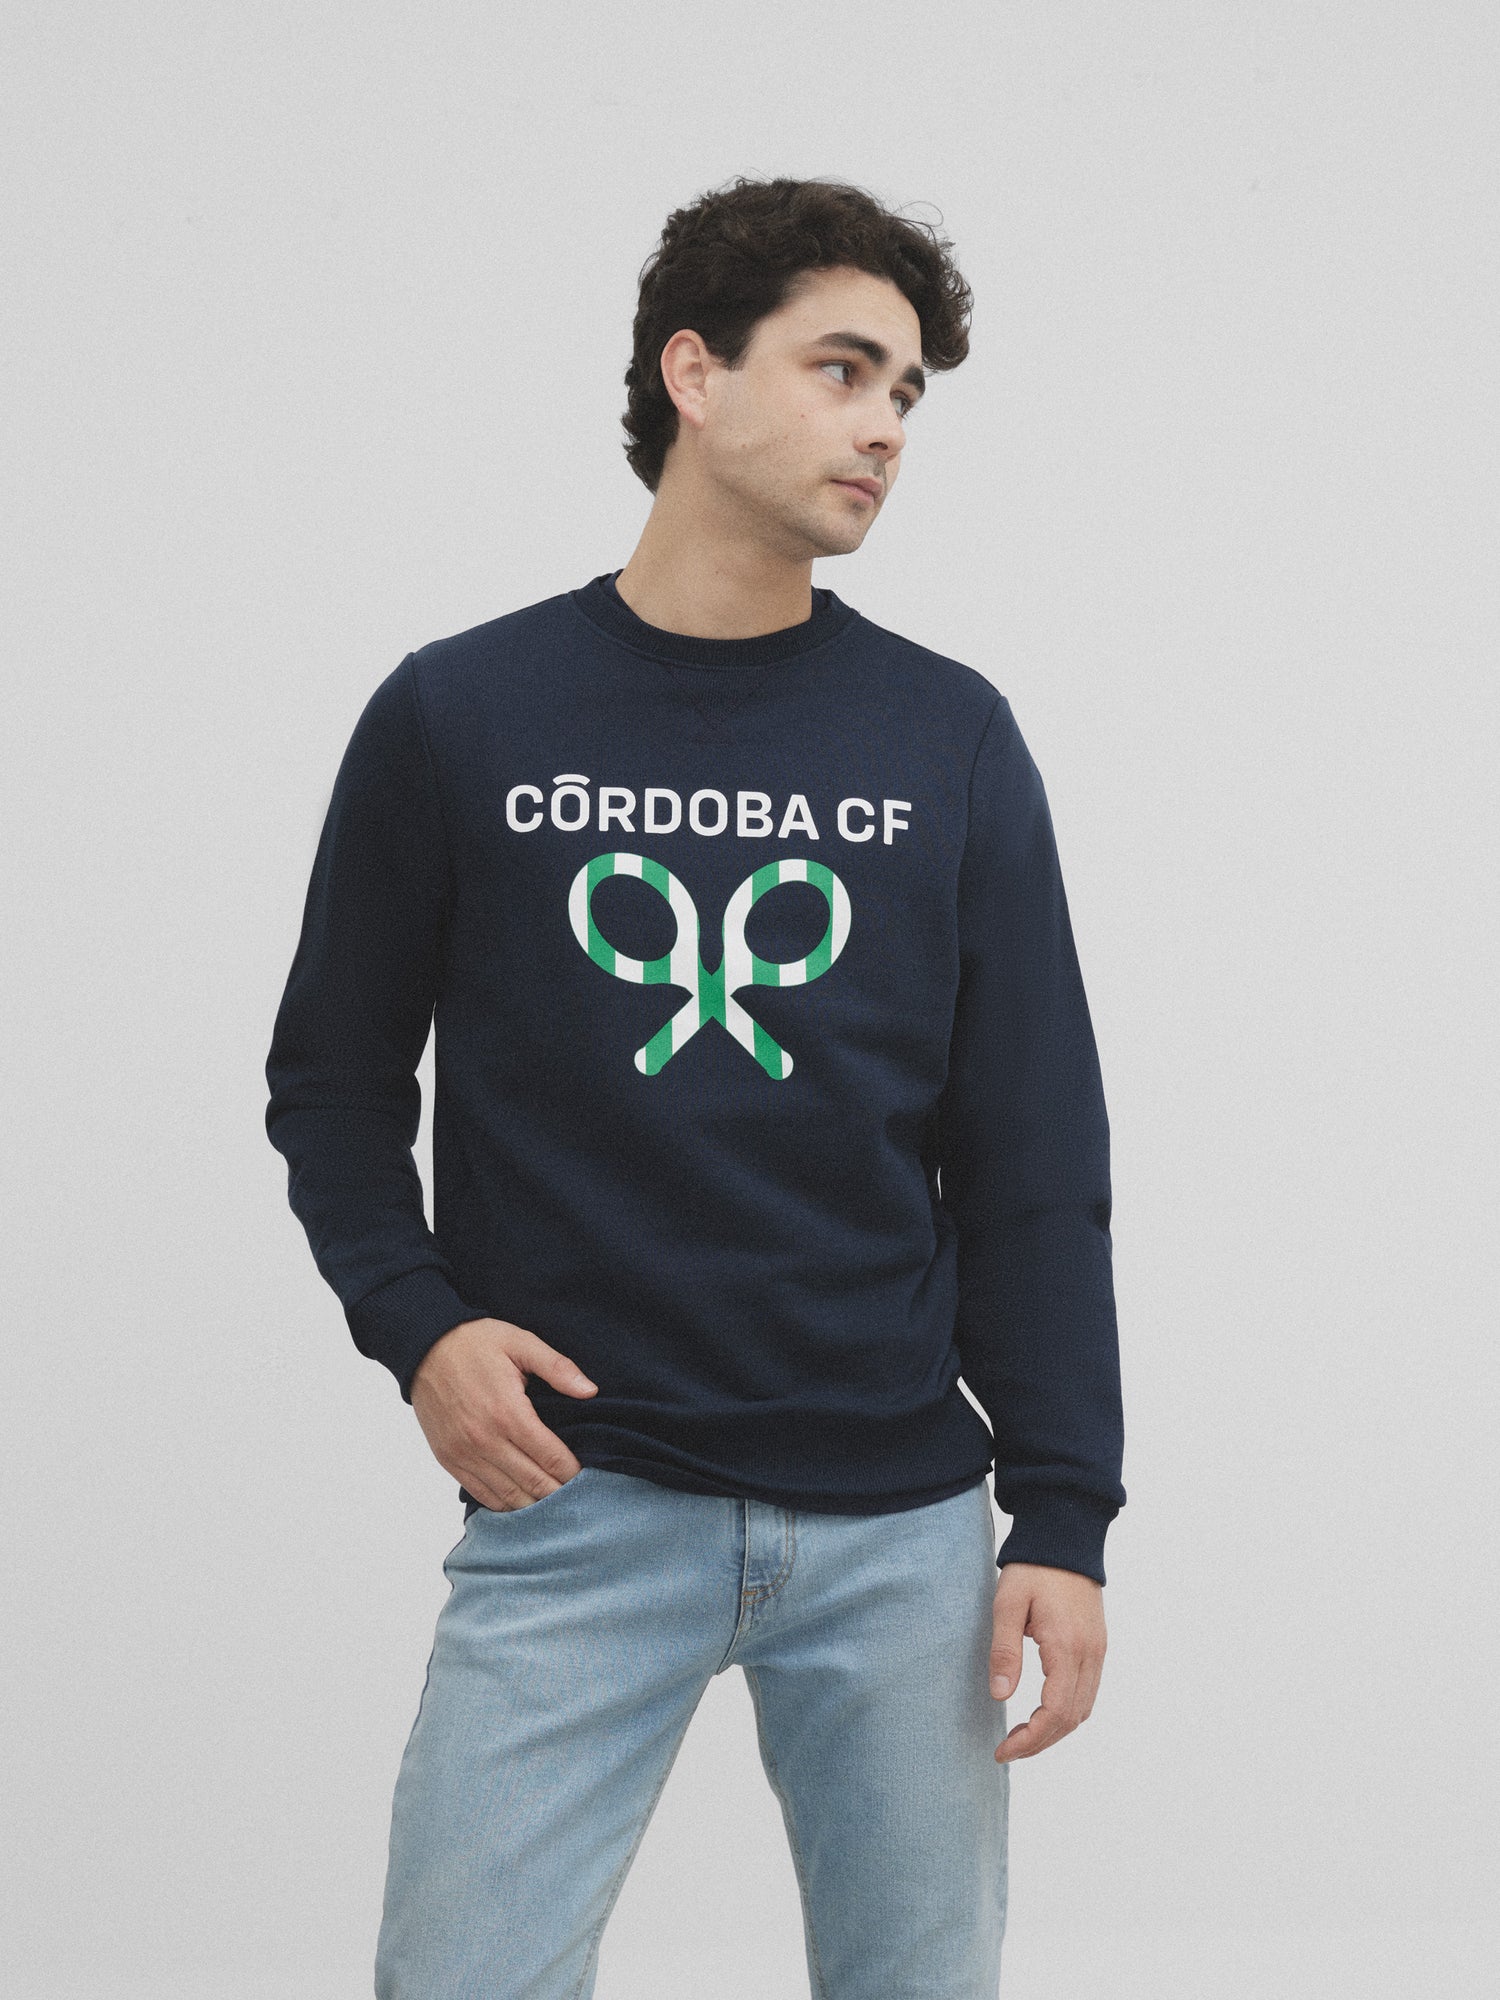 Cordoba CF navy blue sweatshirt